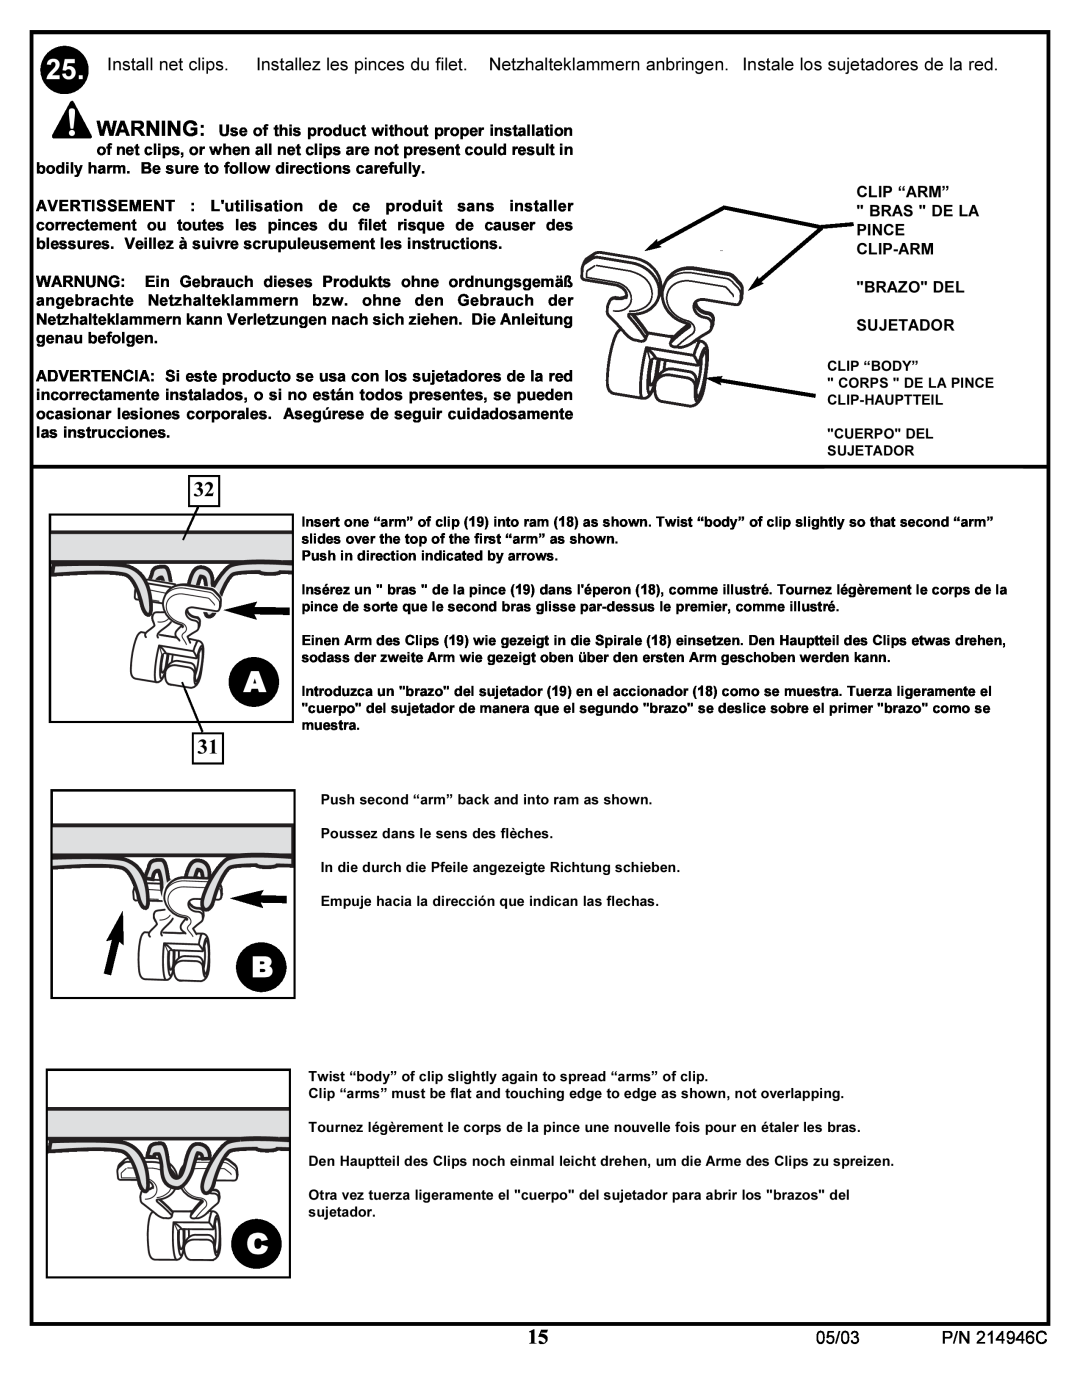 Huffy manual 05/03, P/N 214946C 